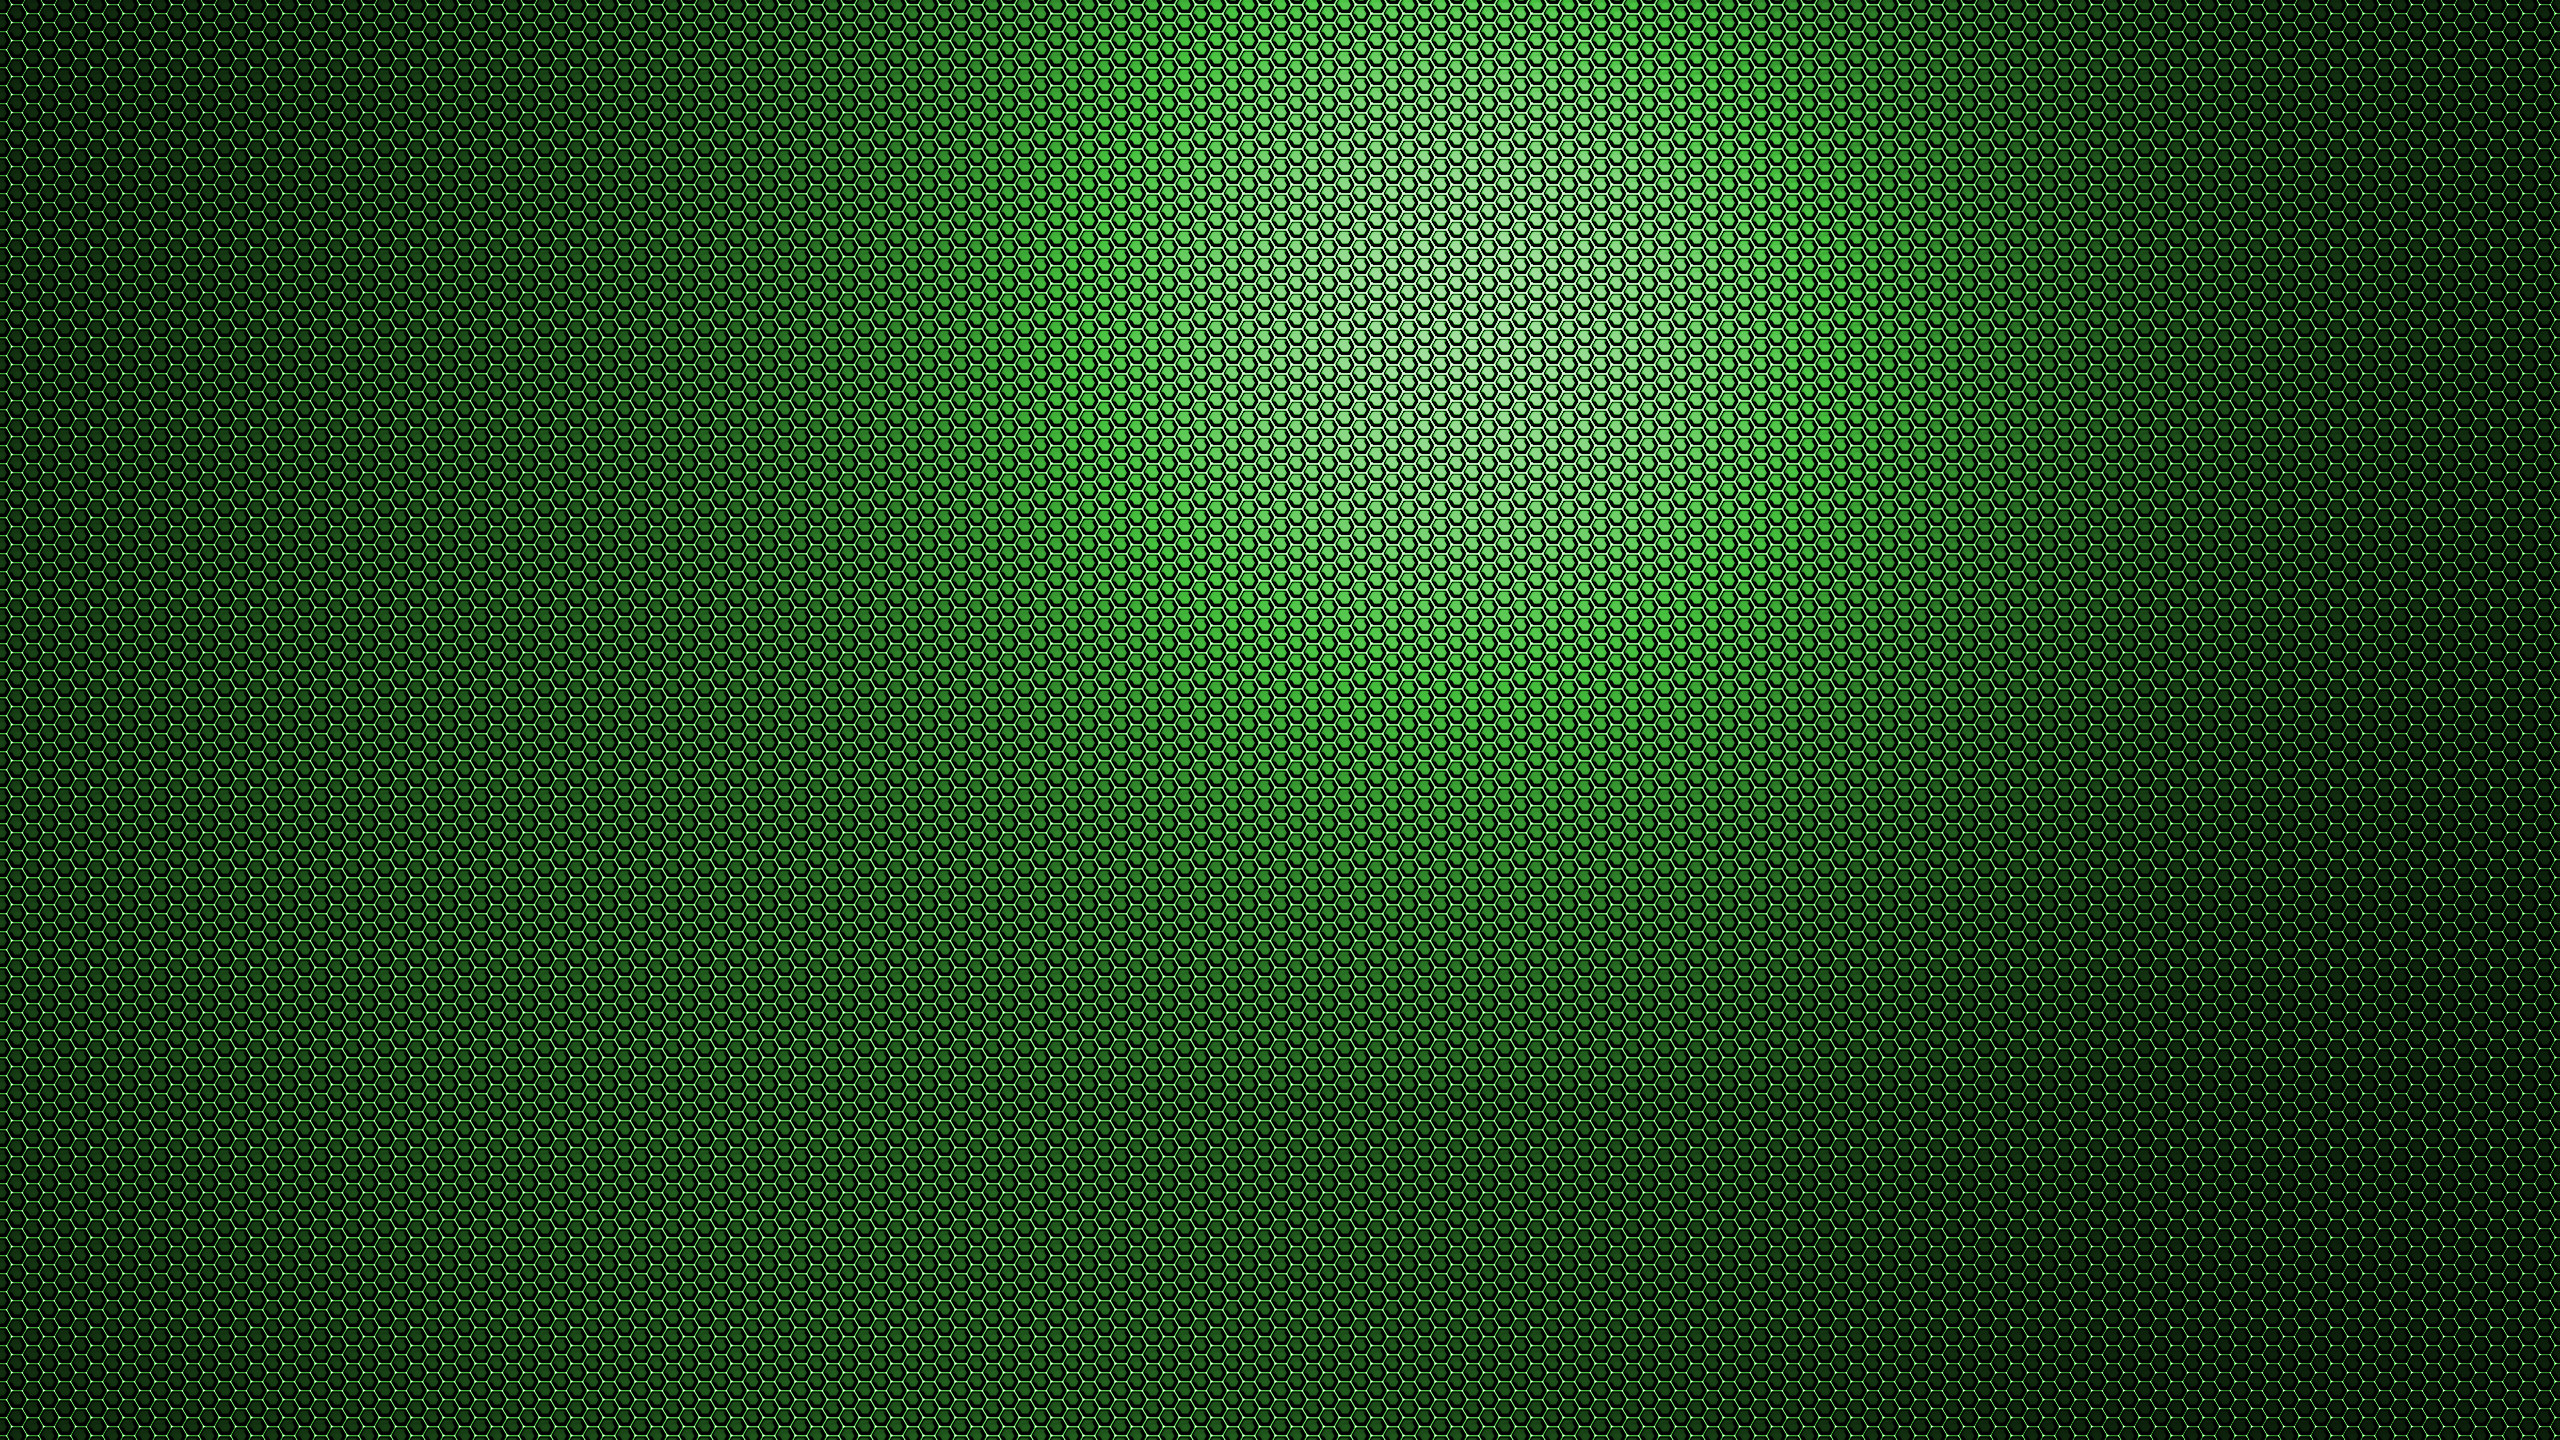 2560x1440 Green Honeycomb Desktop Background wallpapers HD 549753 